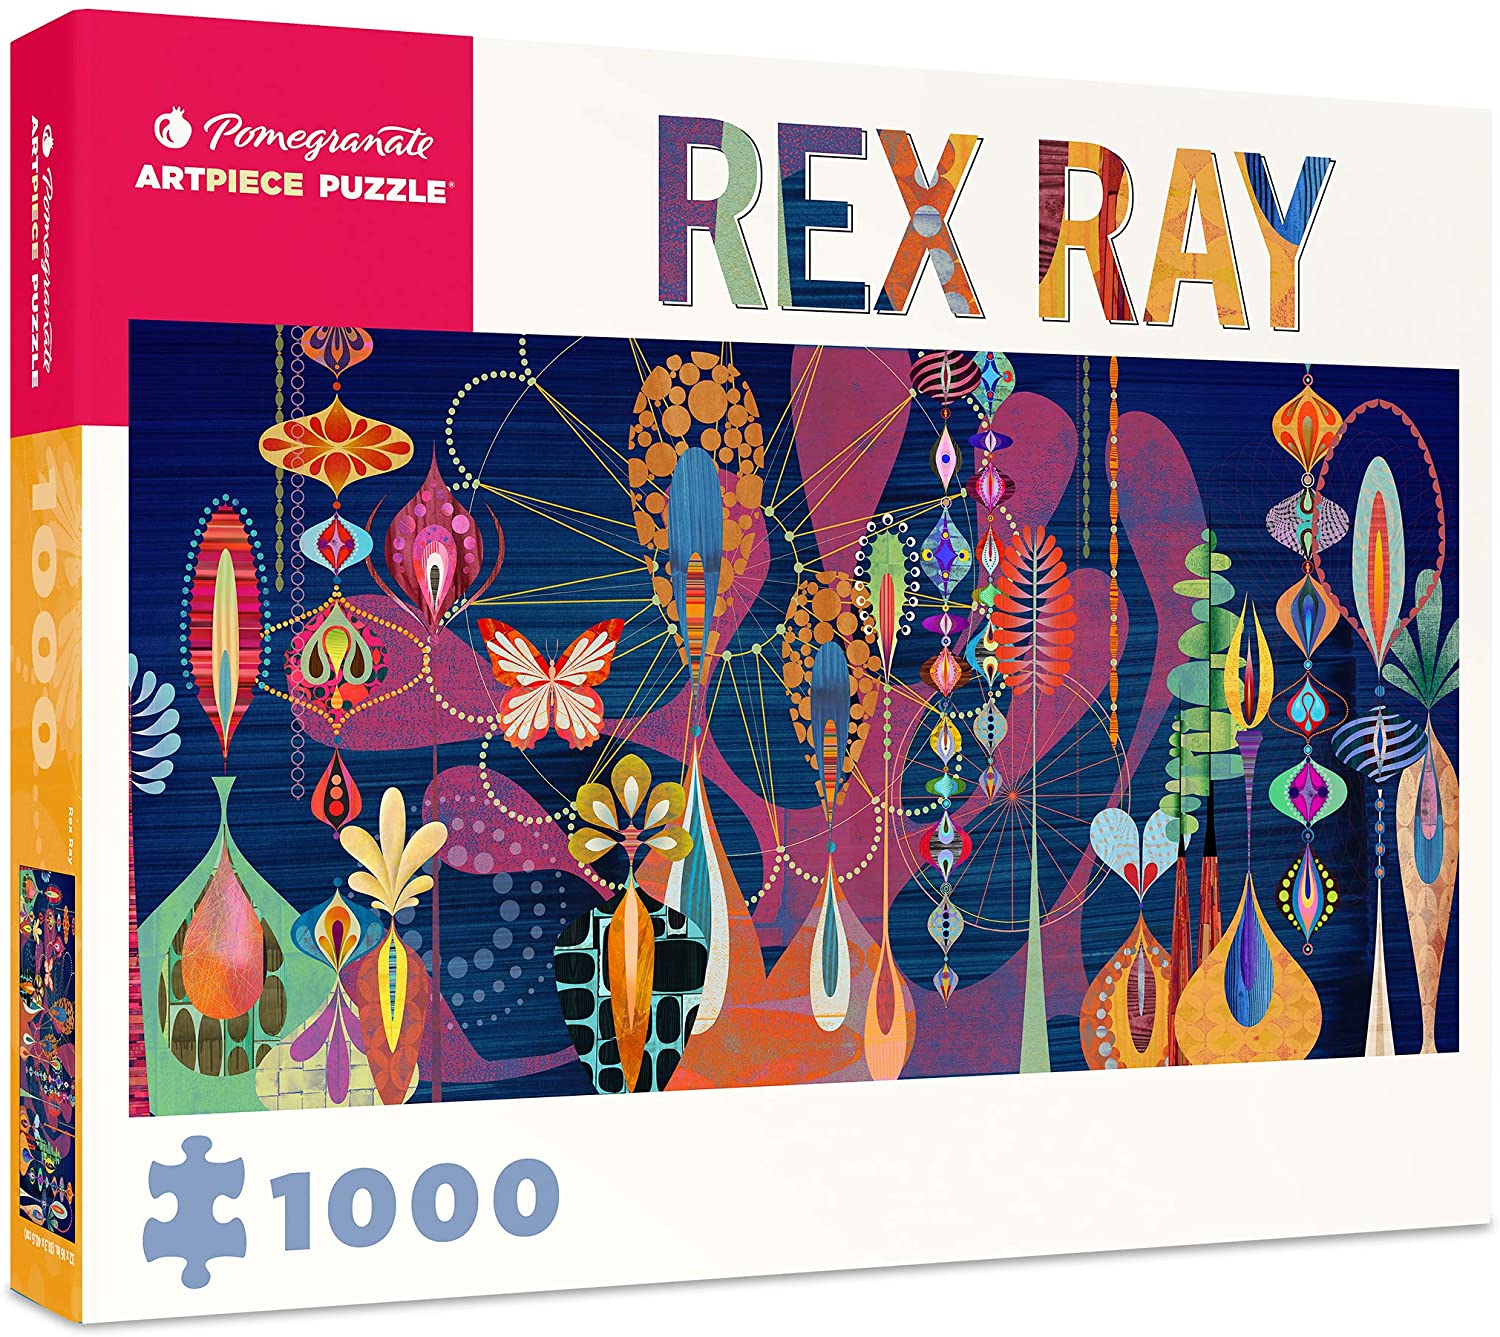 Rex Ray